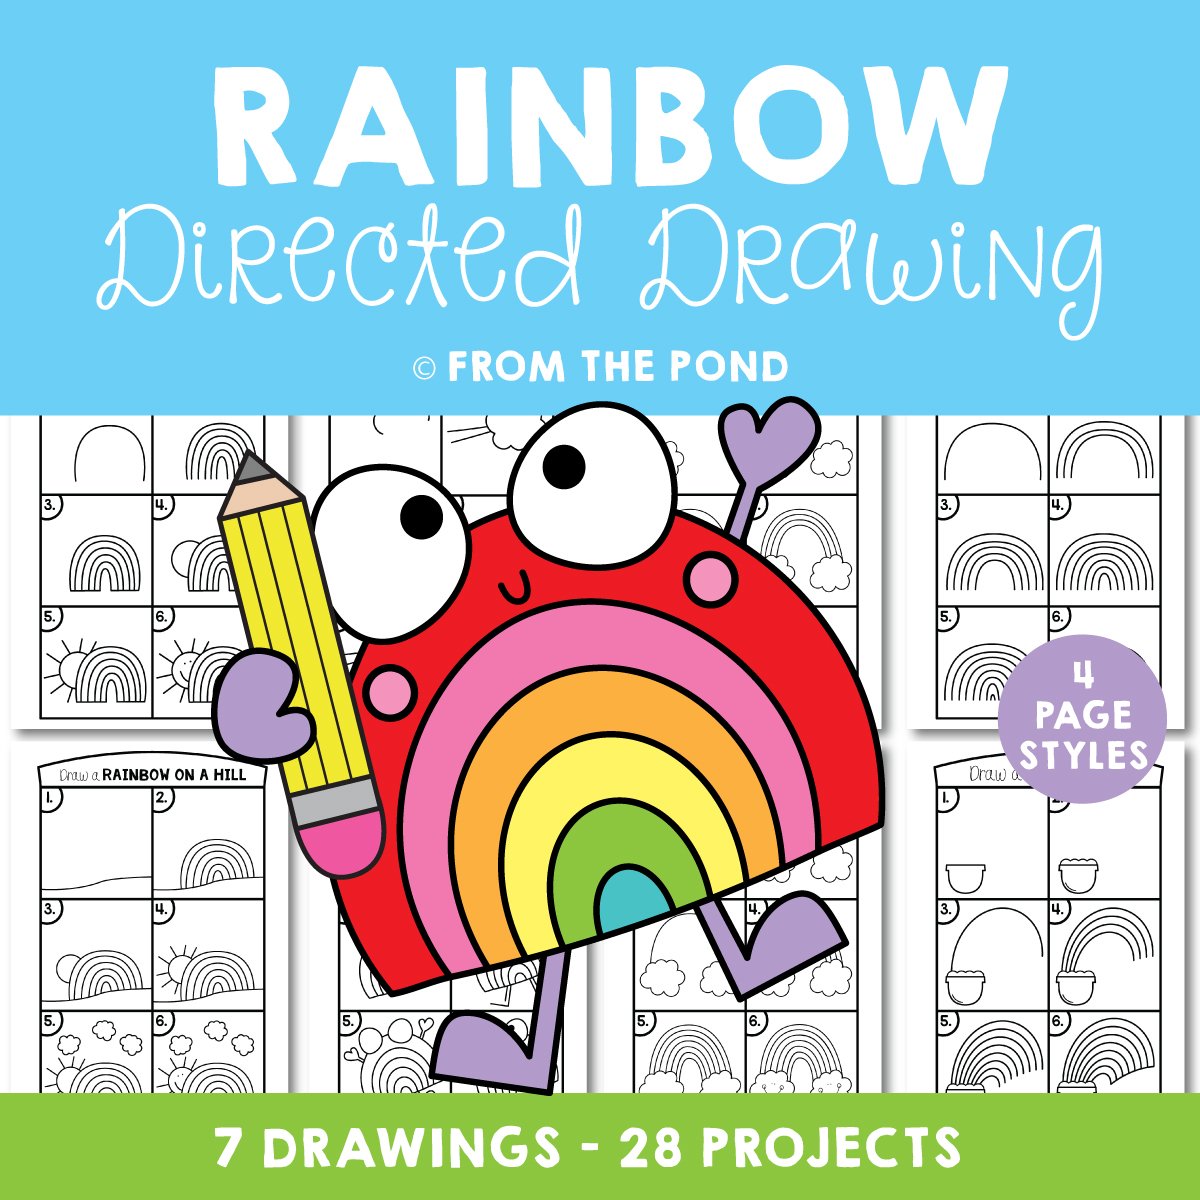 Rainbow Drawings